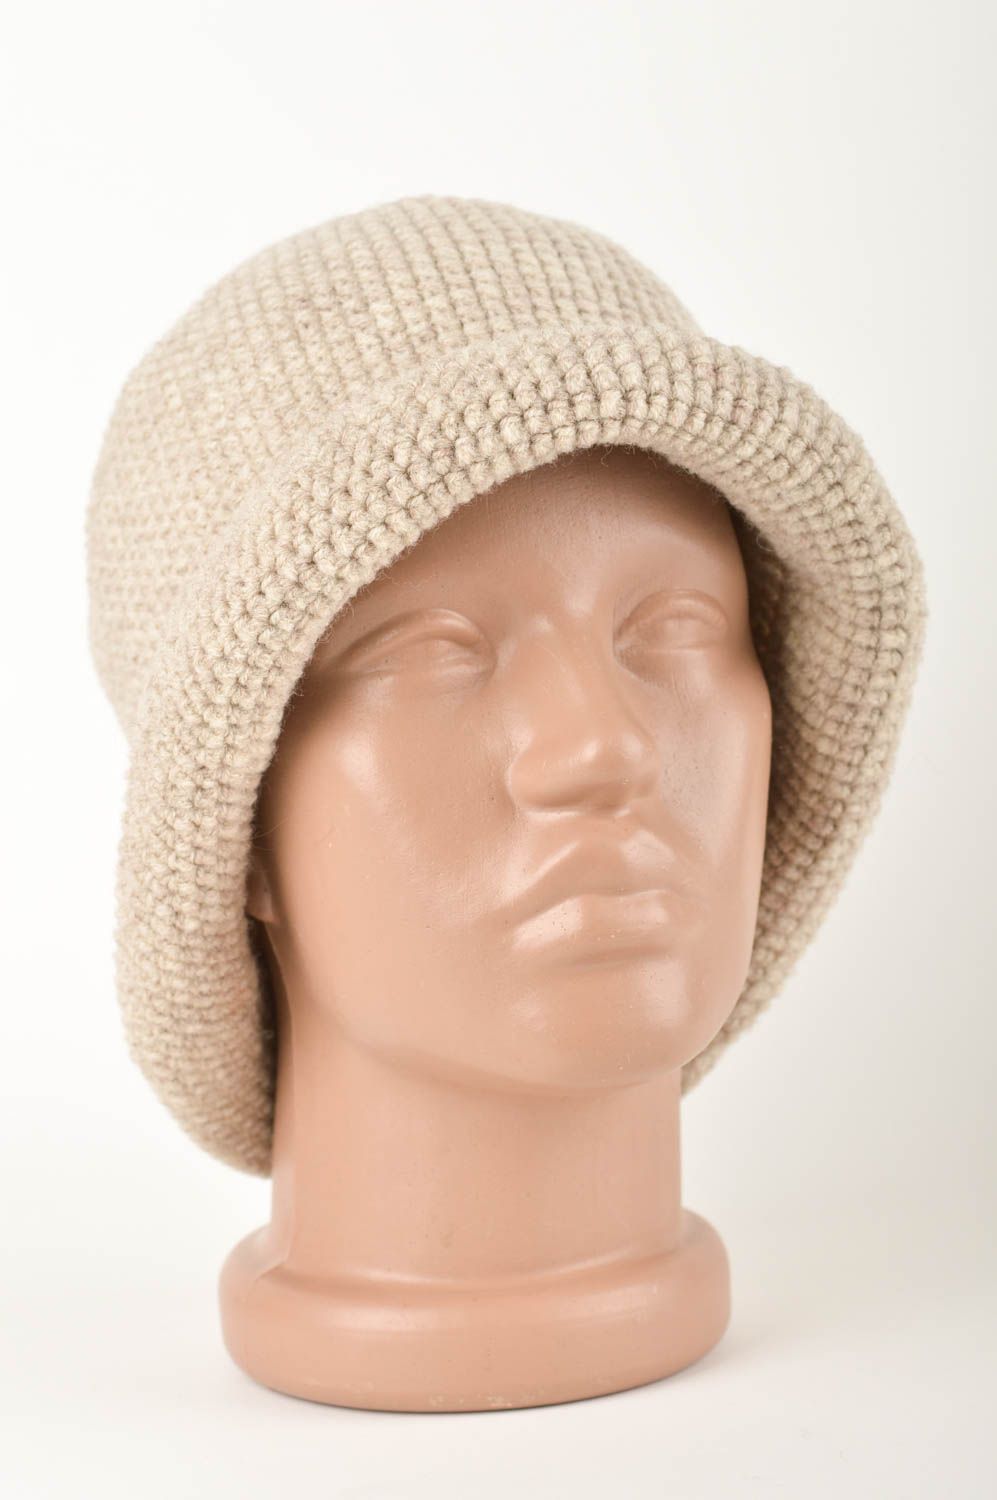 Handmade crocheted headwear unusual designer cap warm winter accessories photo 1